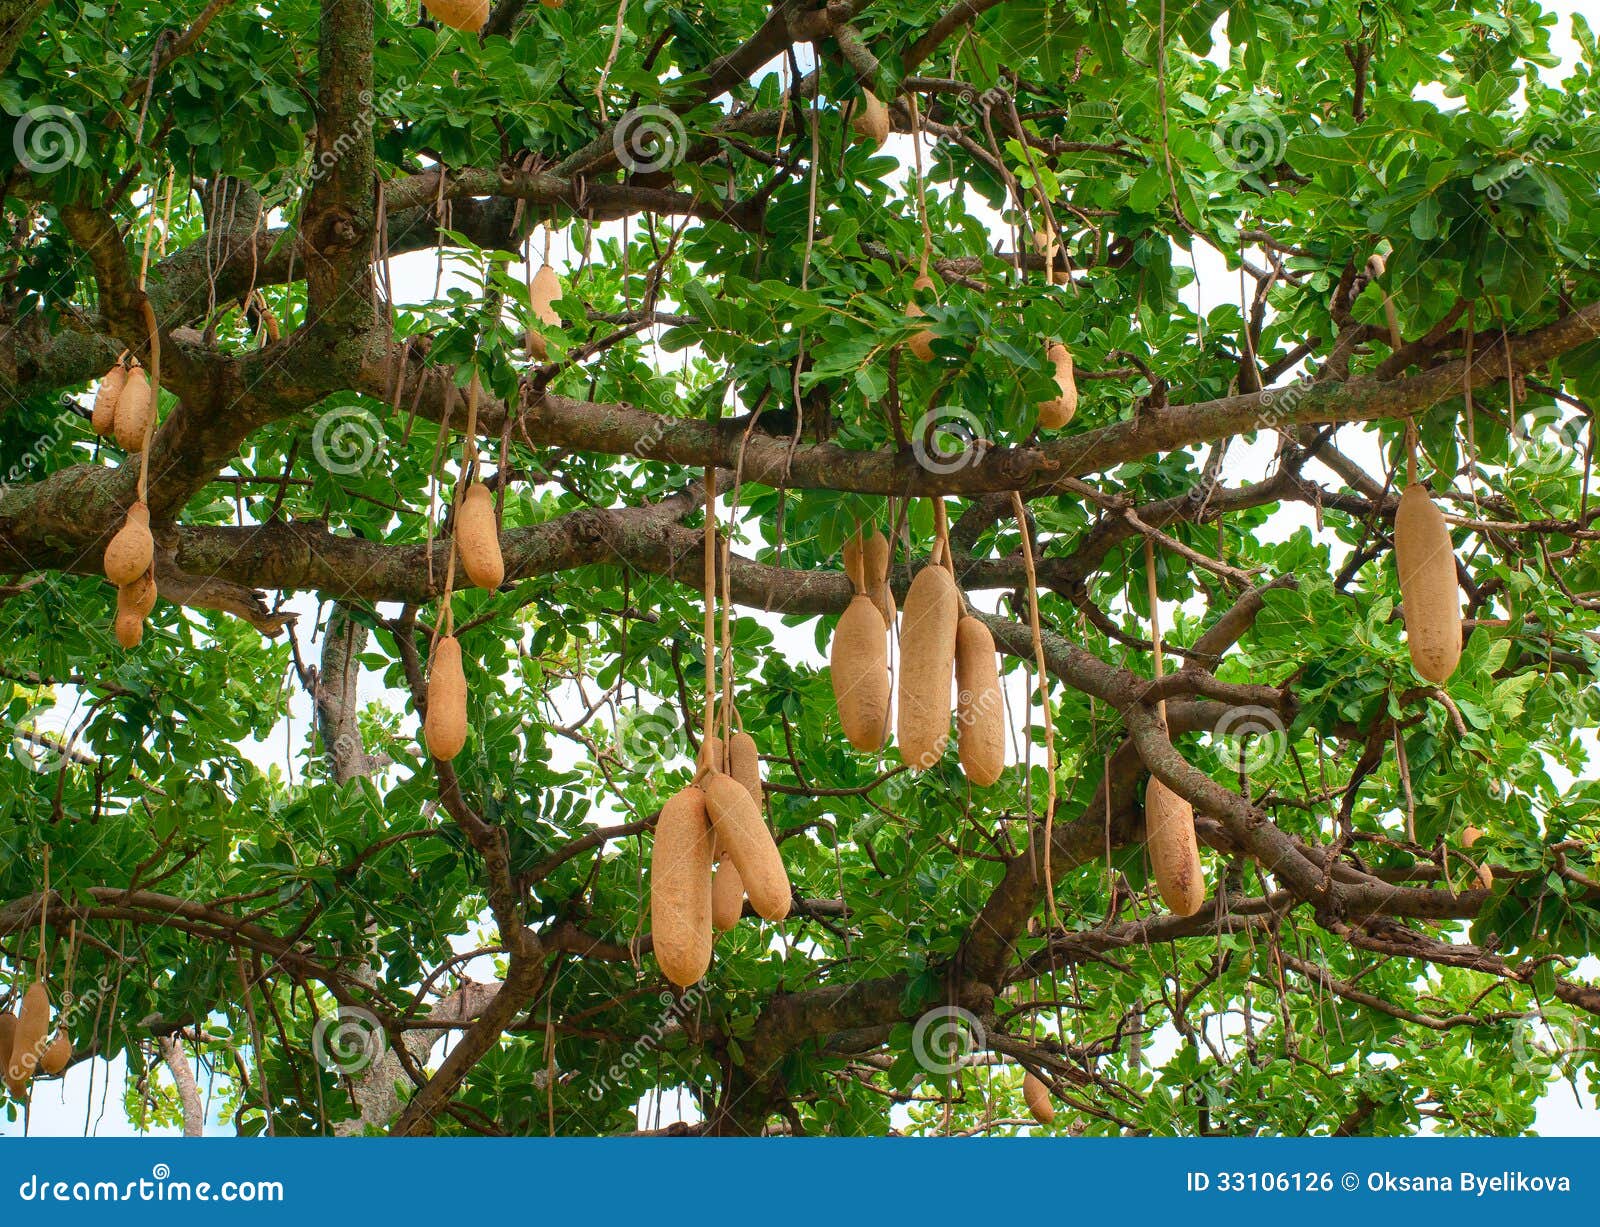 10 Sausage Tree Fruit Kigelia Africana Photos   Free & Royalty ...